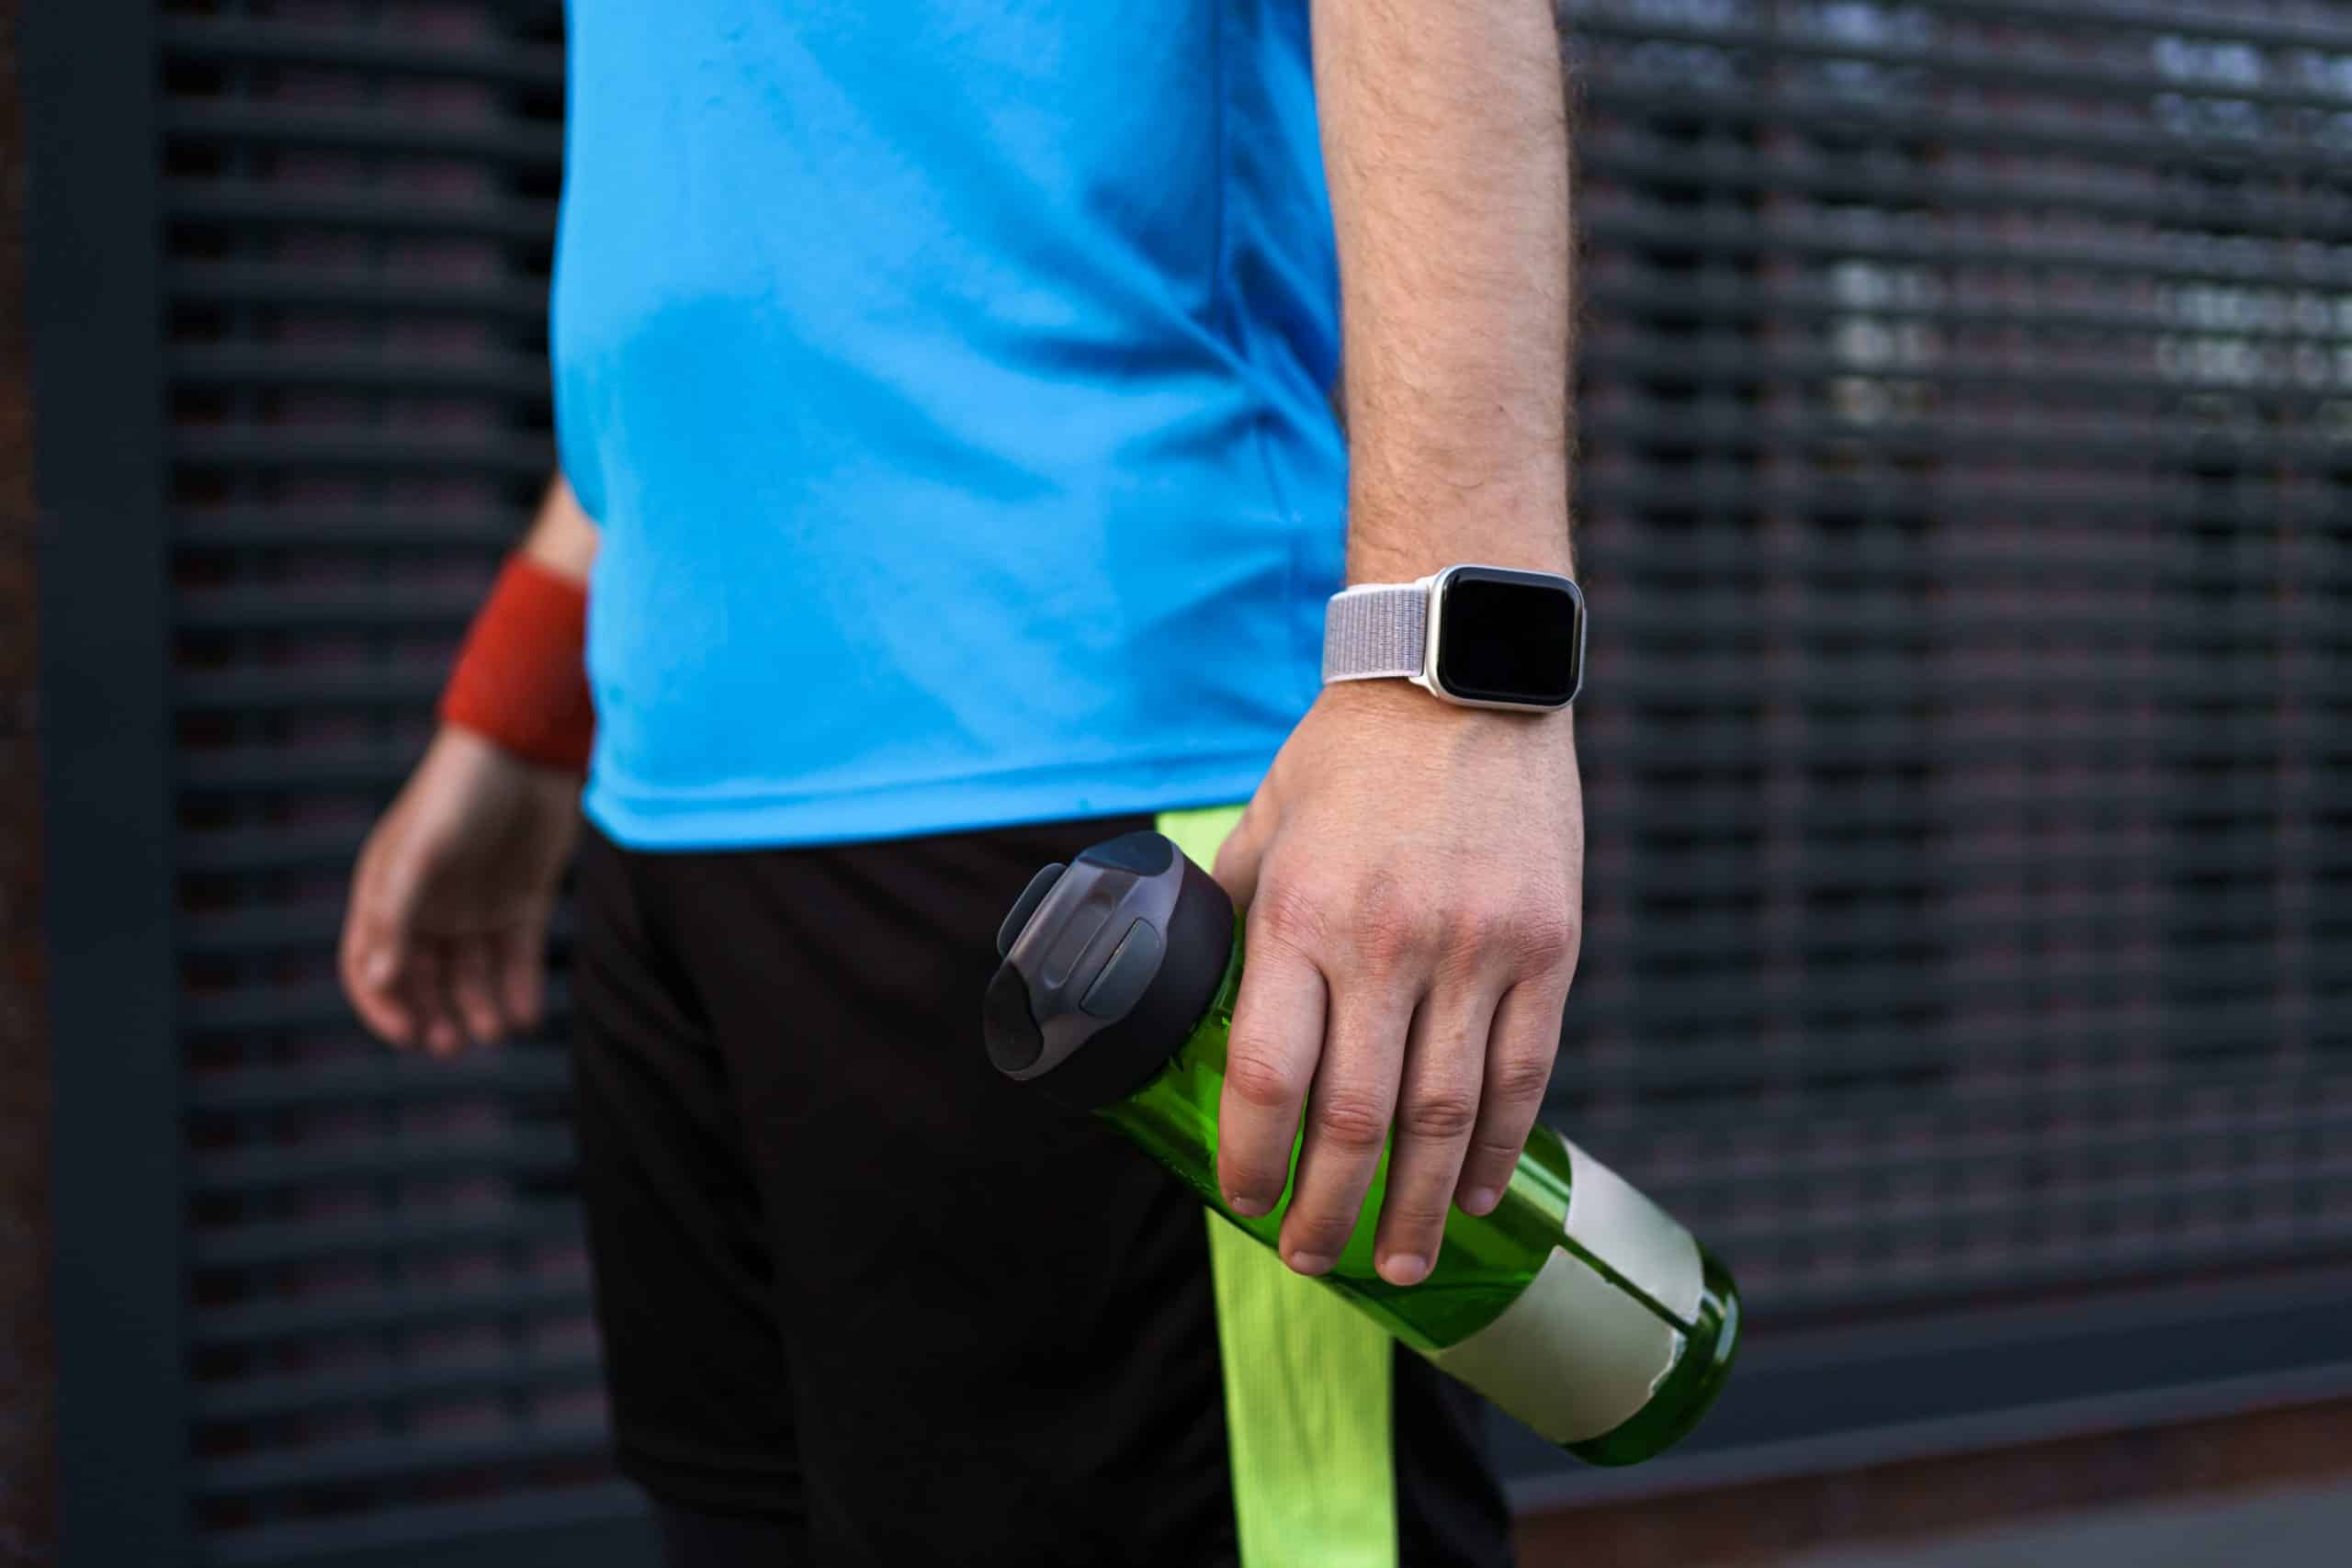 Gadgets useful during running training